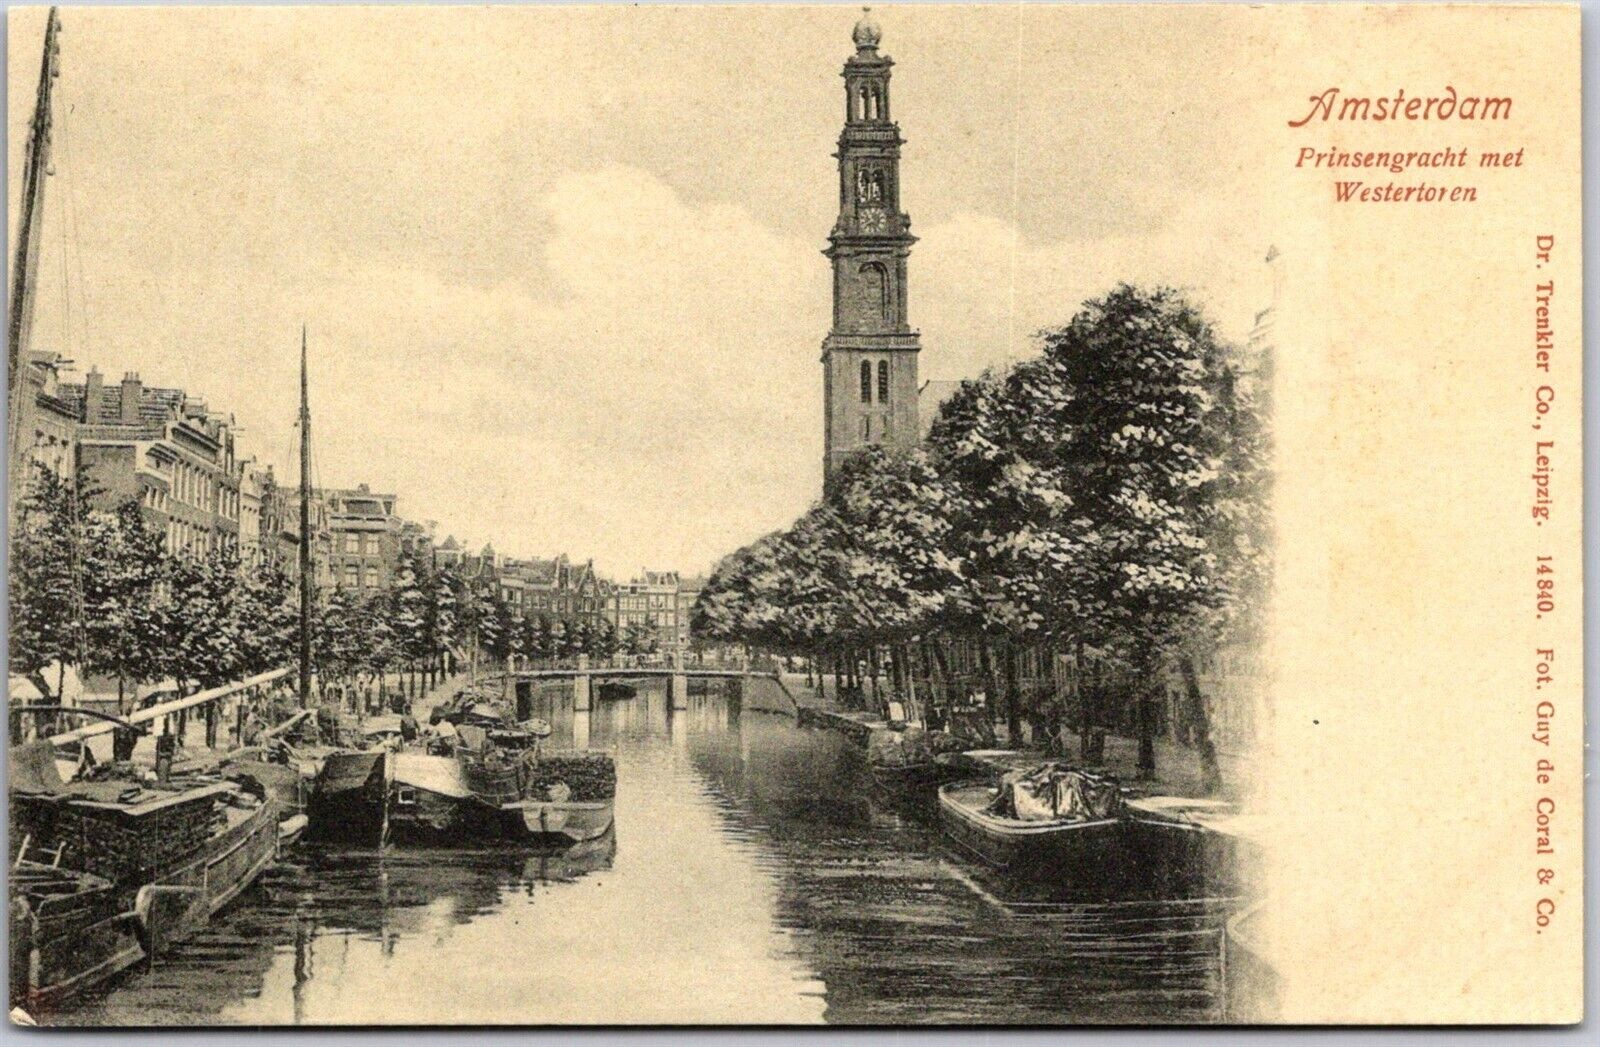 Netherlands, Amsterdam, Prinsengracht met Westertoren, Canal, WB Unp Dr Trenkler